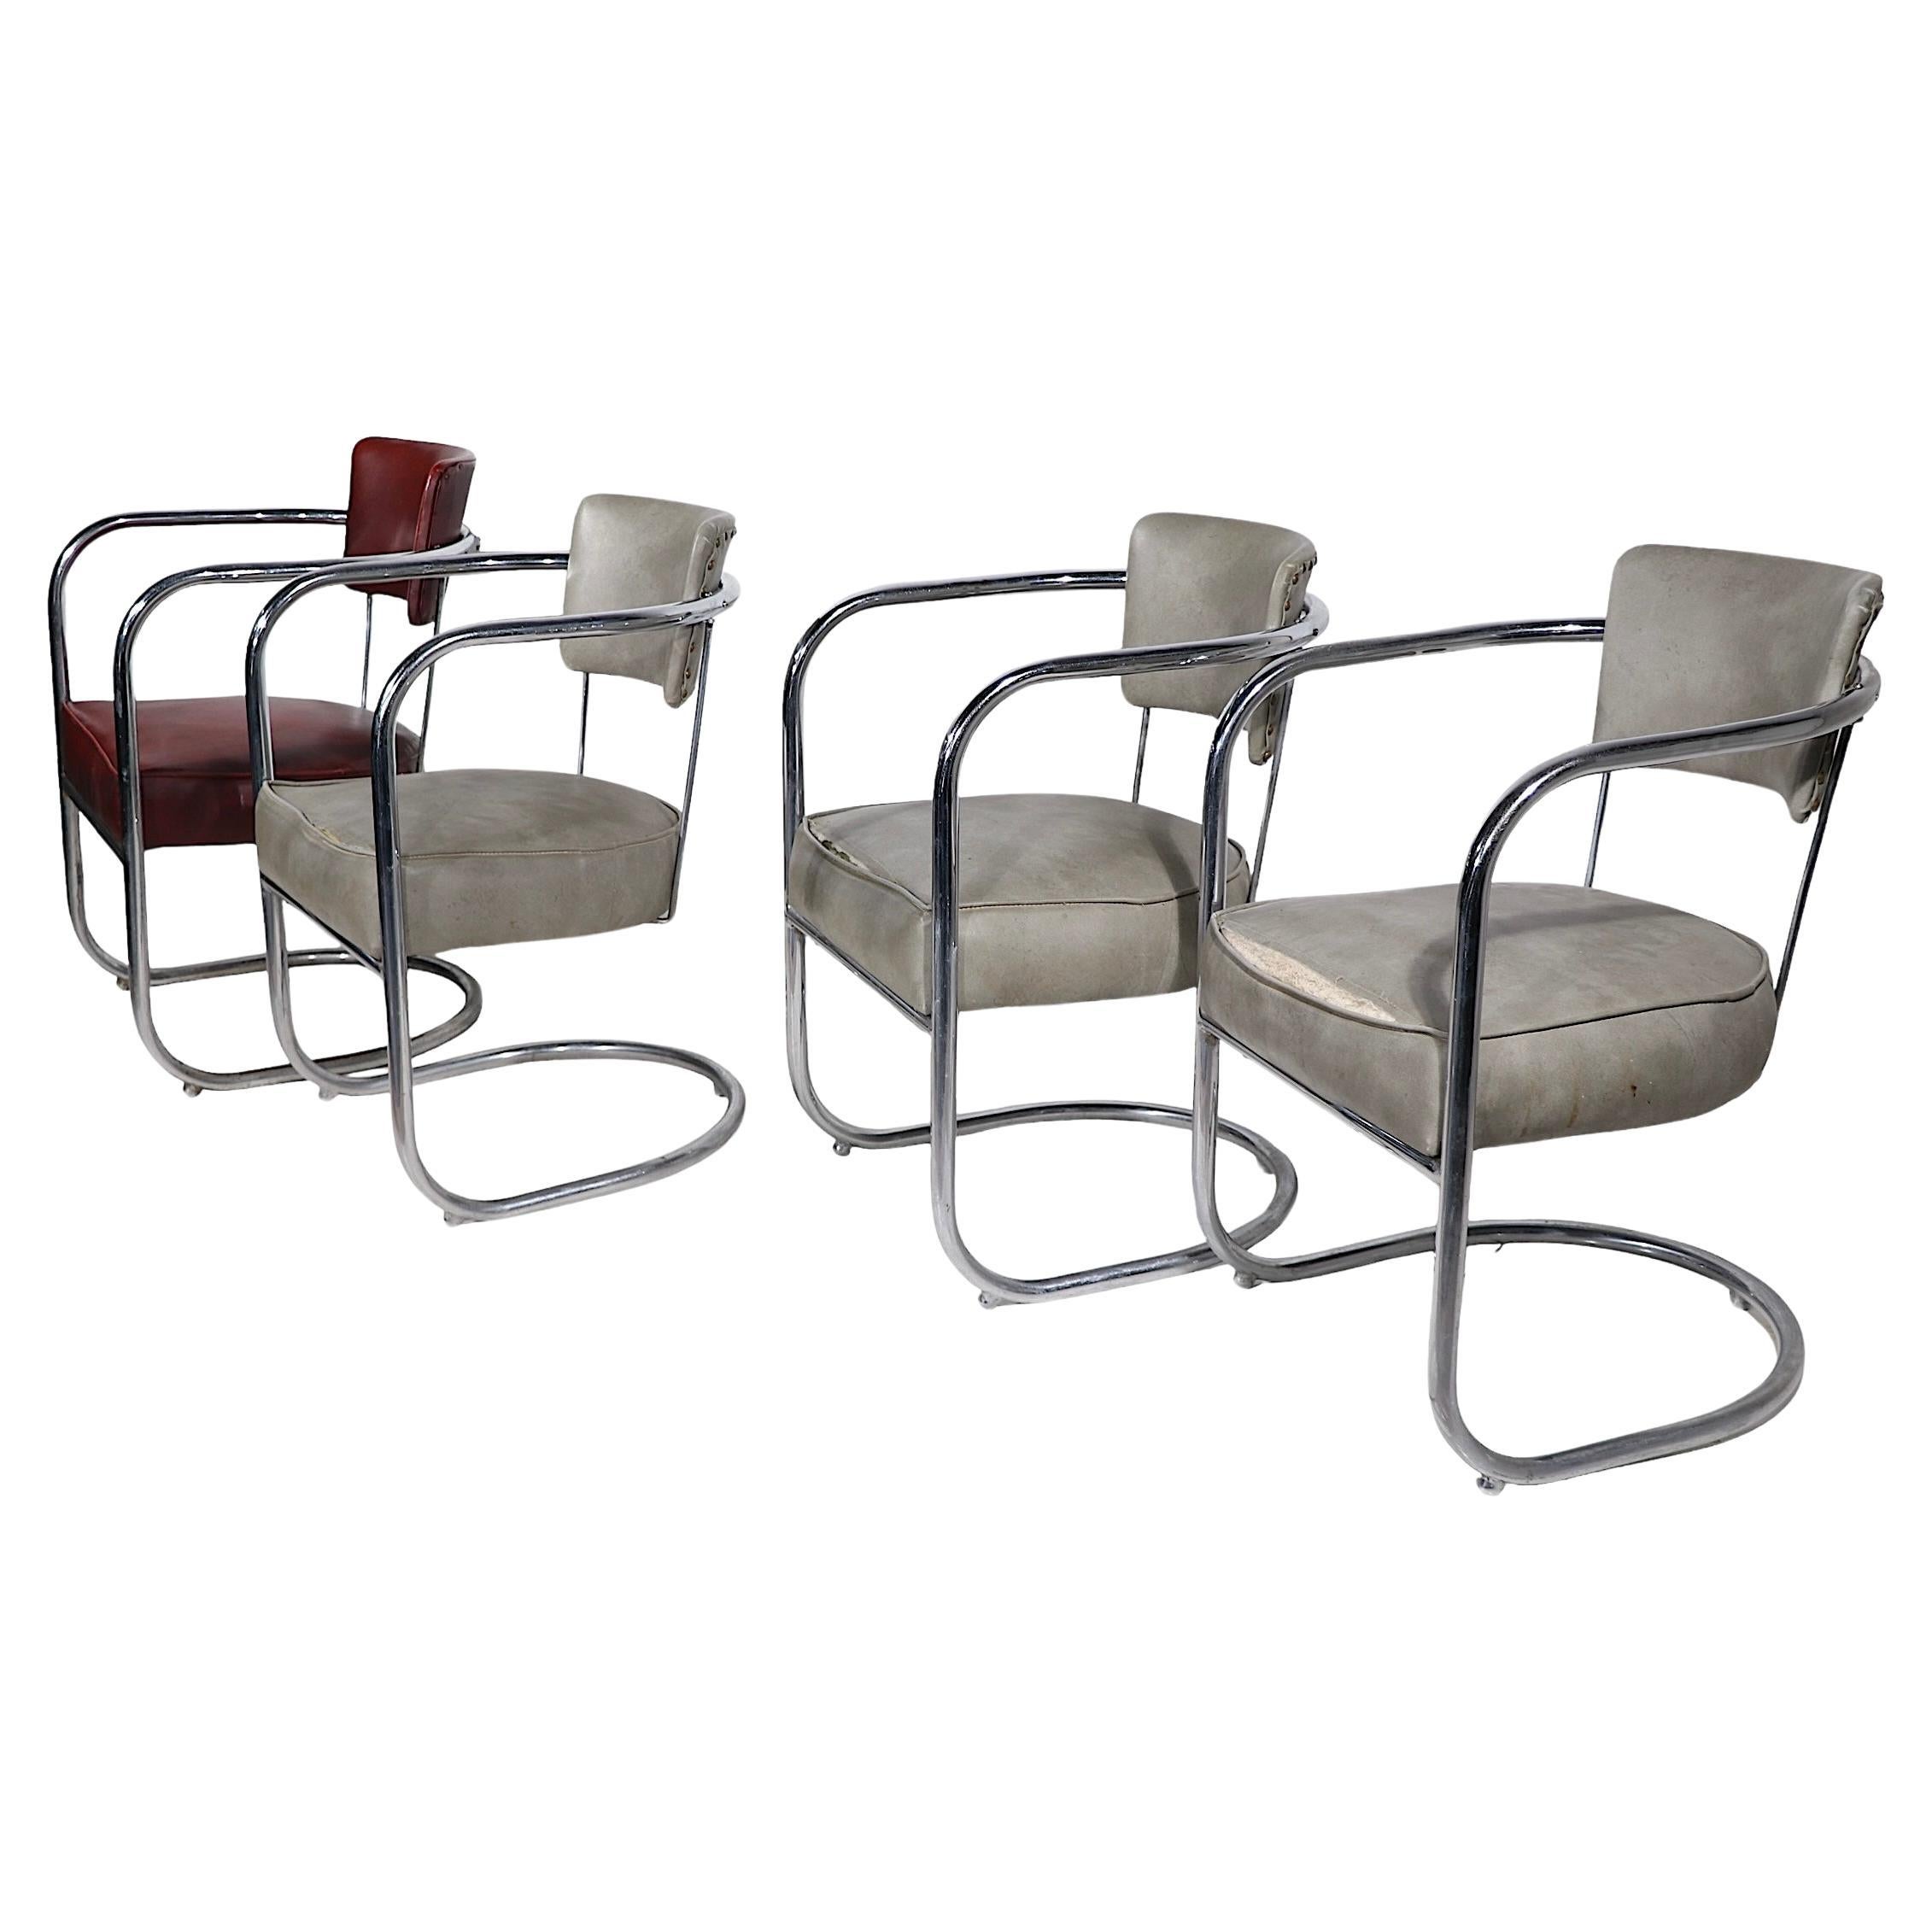 4 Chrome Art Deco Arm Chairs by Lloyd Furniture att. to Kem Weber c.1930's For Sale